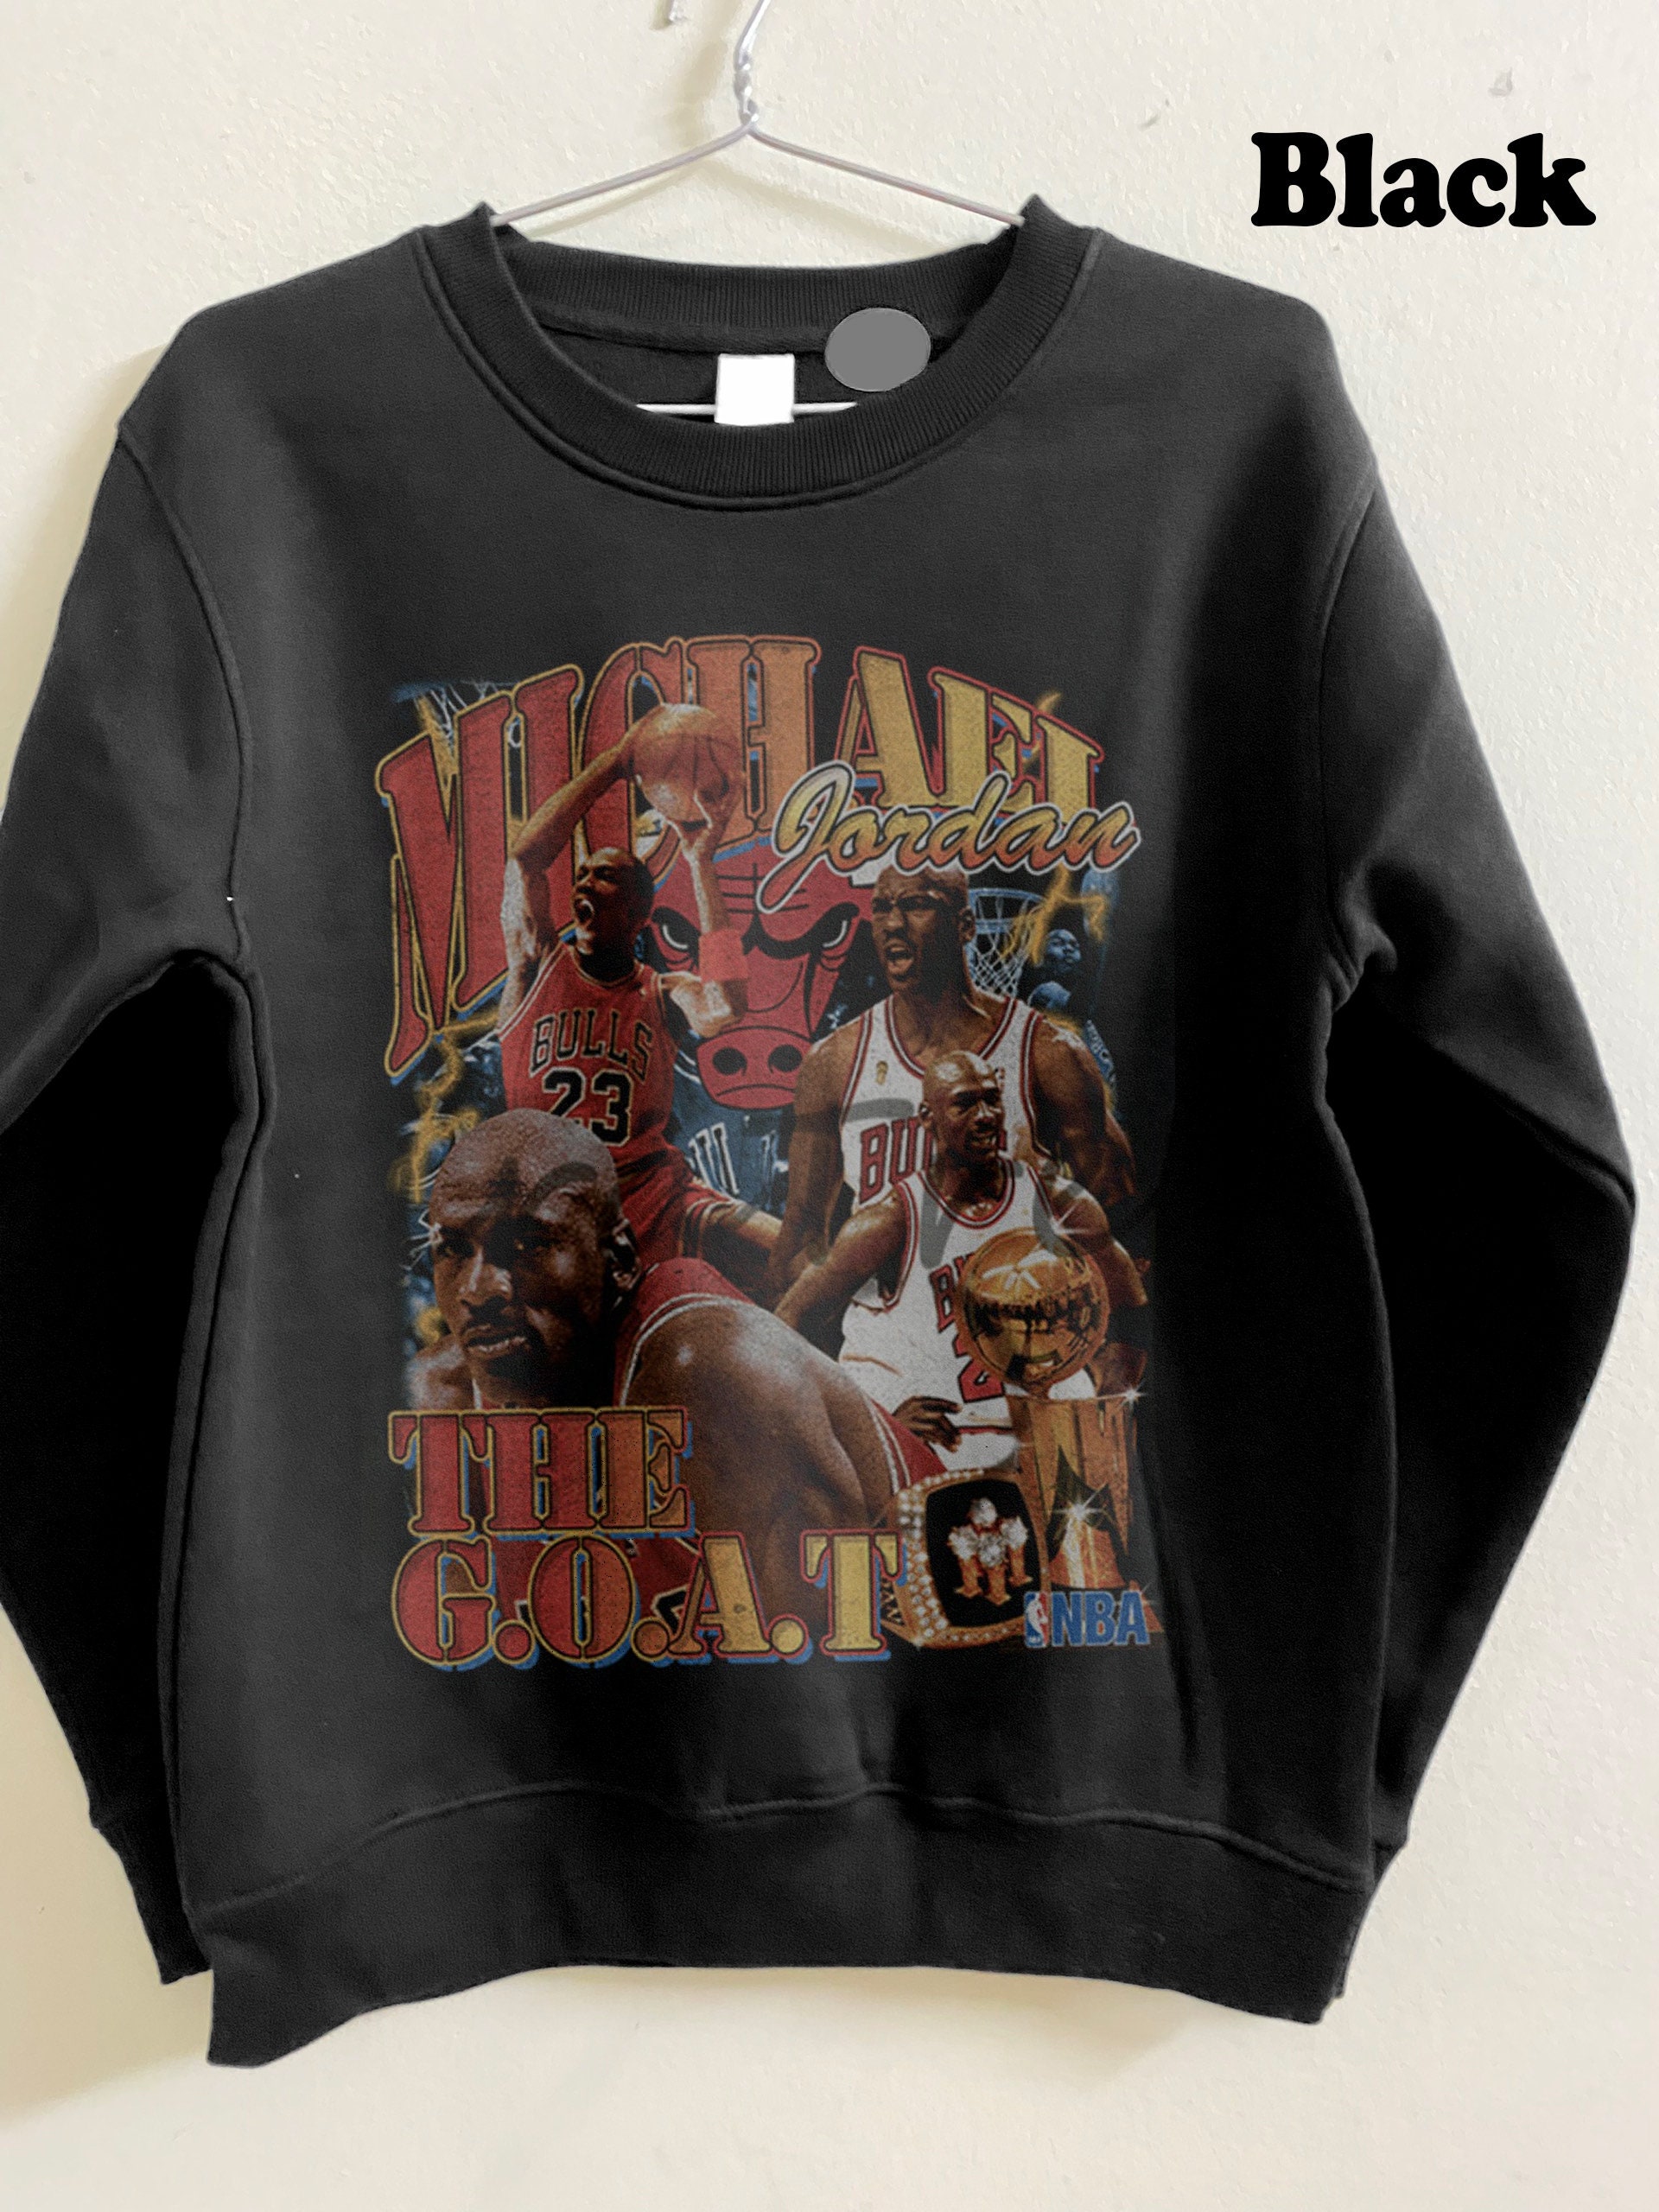 Damian Lillard Giannis Antetokounmpo Milwaukee Bucks Homage Nba Jam T-Shirt,  hoodie, sweater and long sleeve